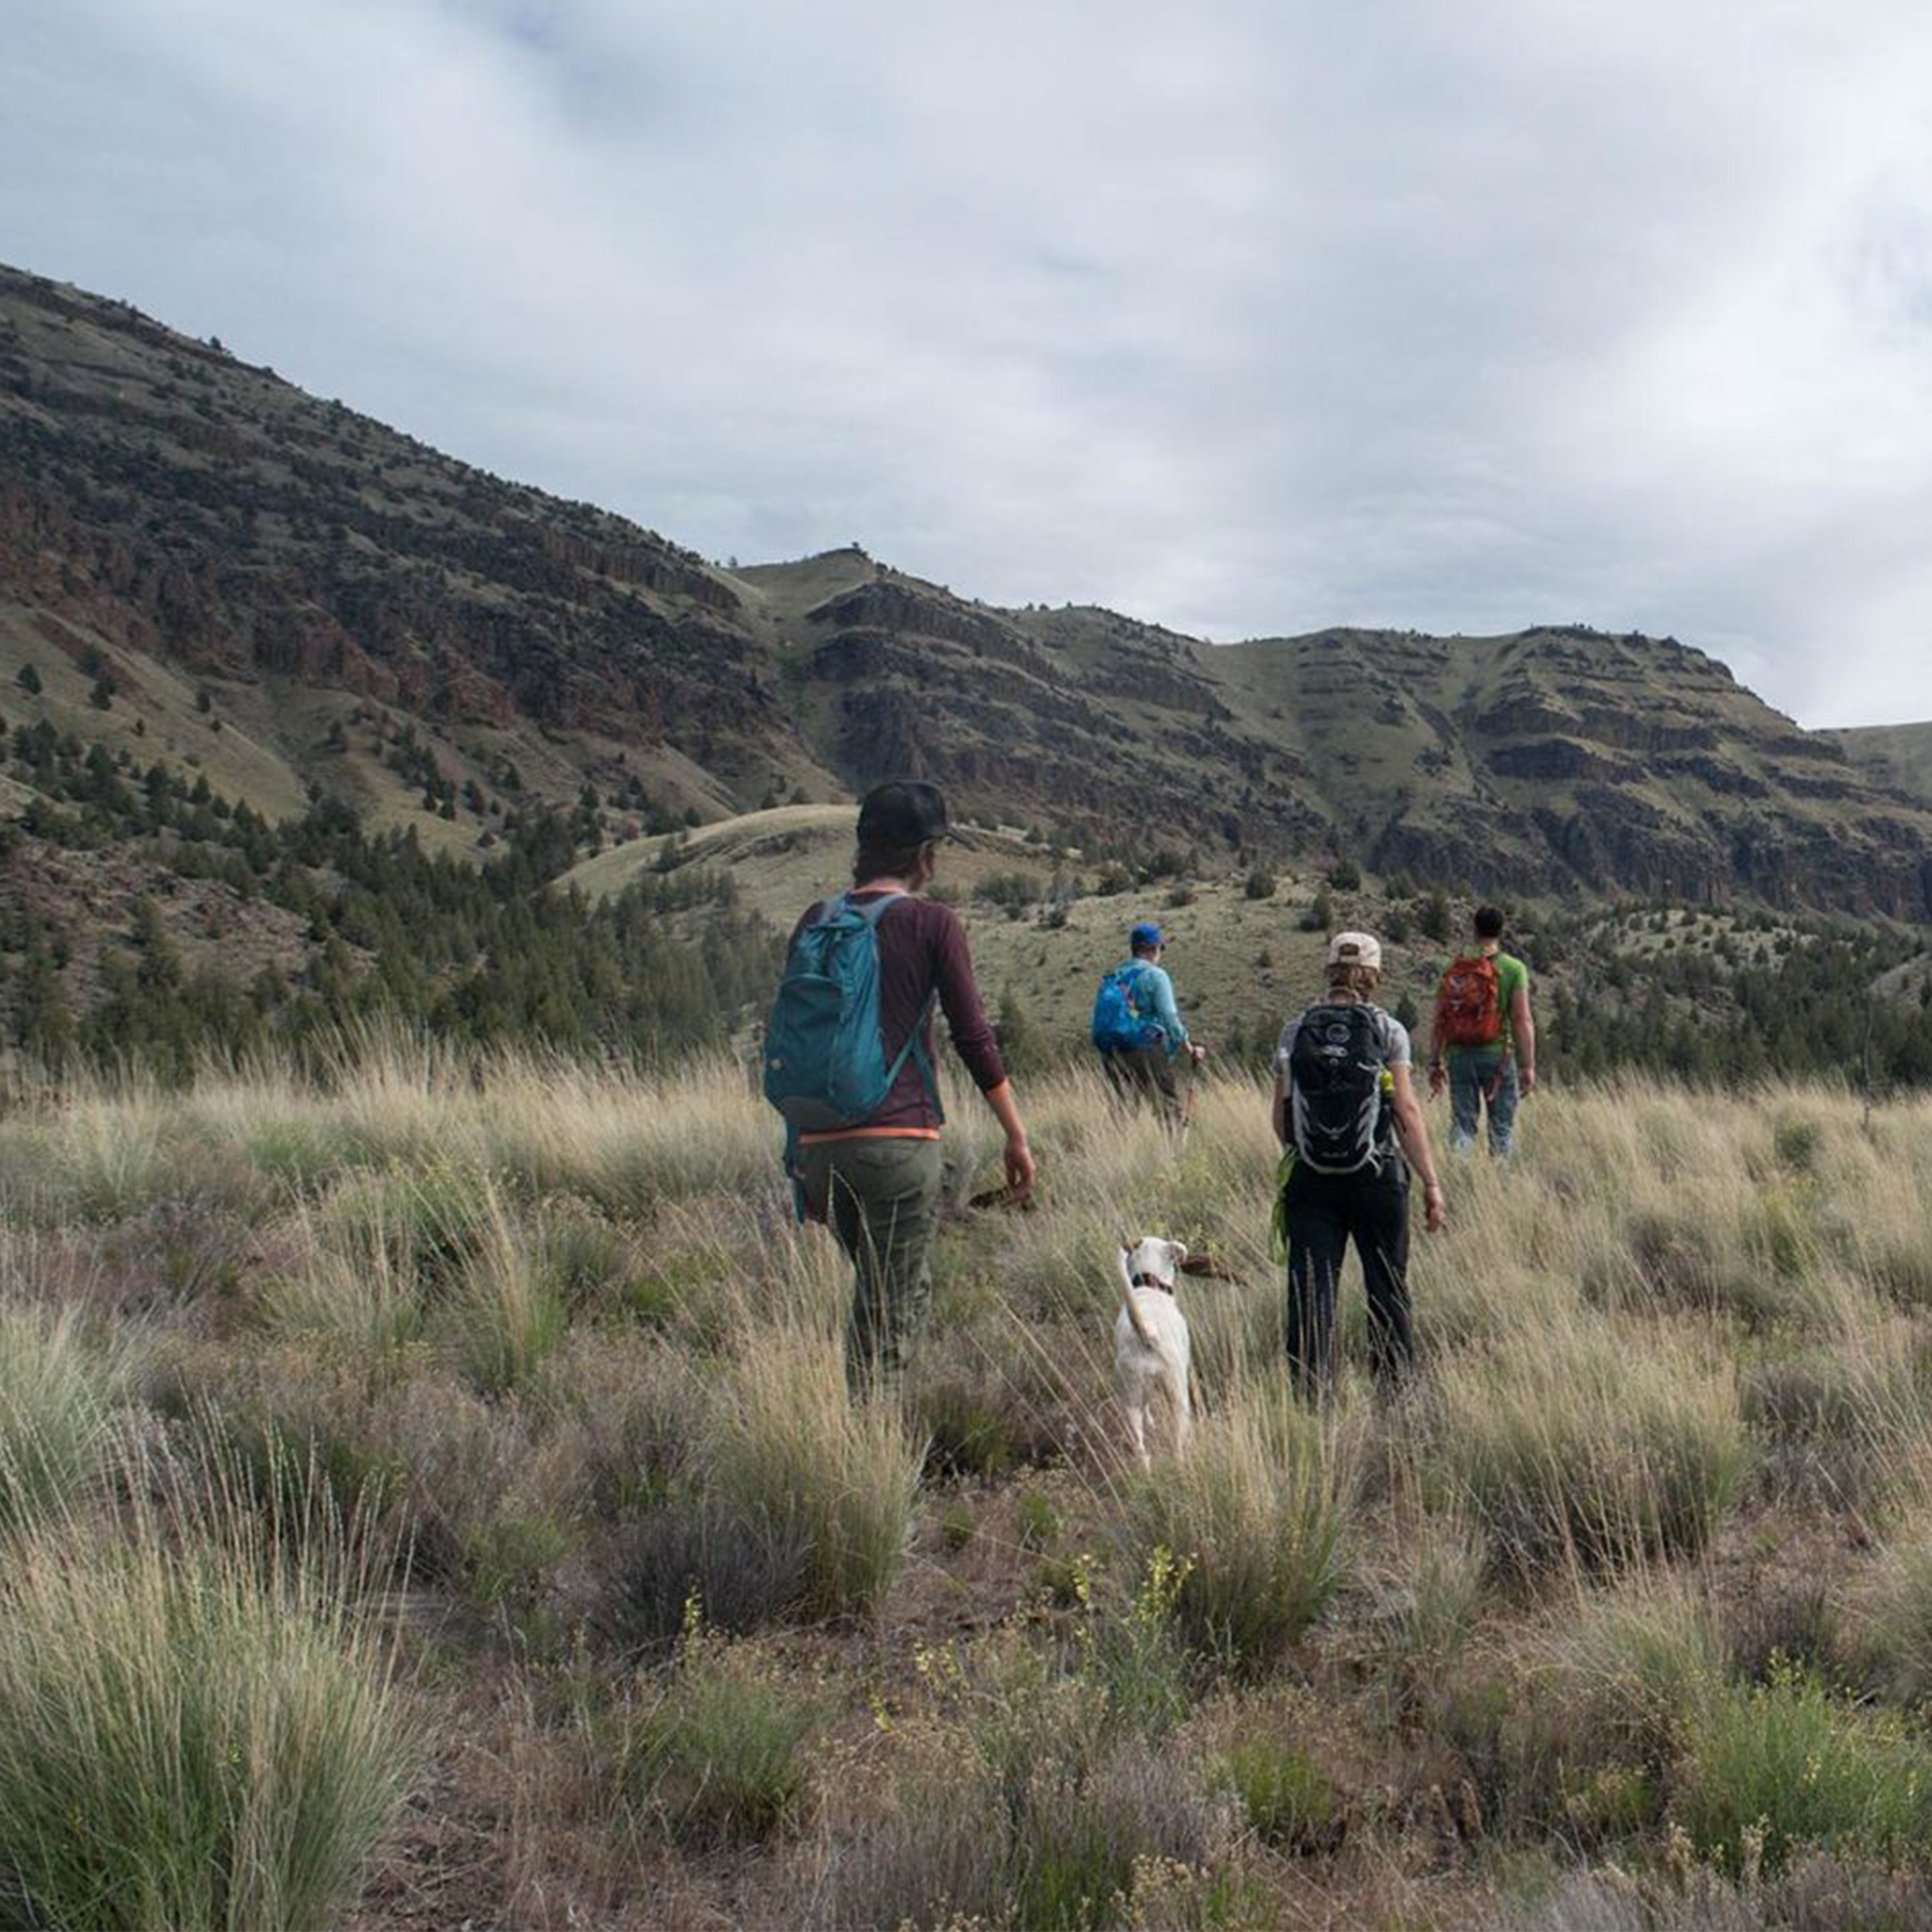 Oregon Natural Desert Association x Mountain Shop: How to Recreate Safely in Oregon's High Desert